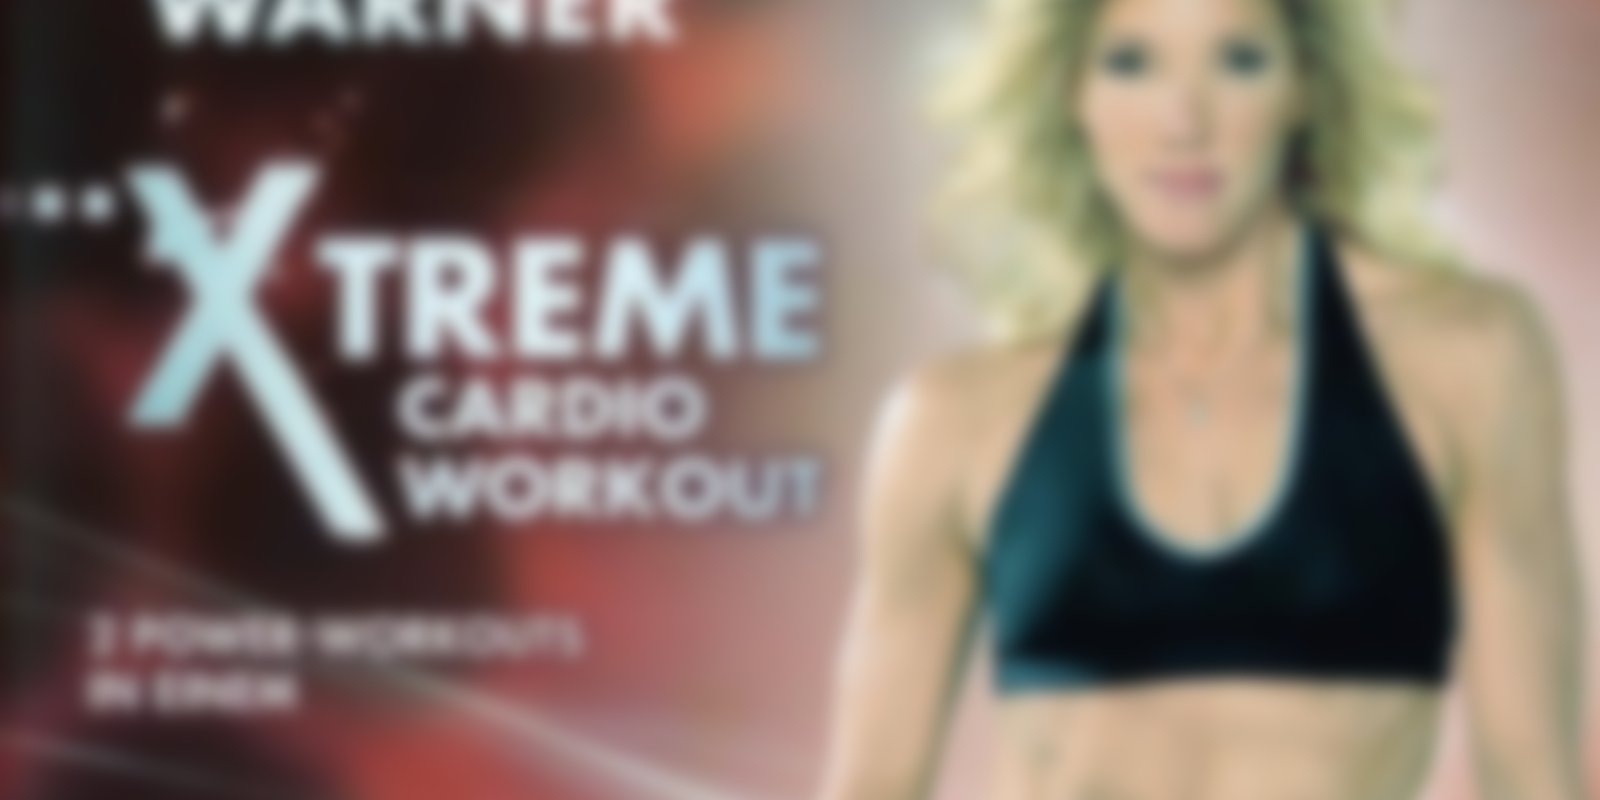 Personal Training mit Jackie Warner - Xtreme Cardio Workout